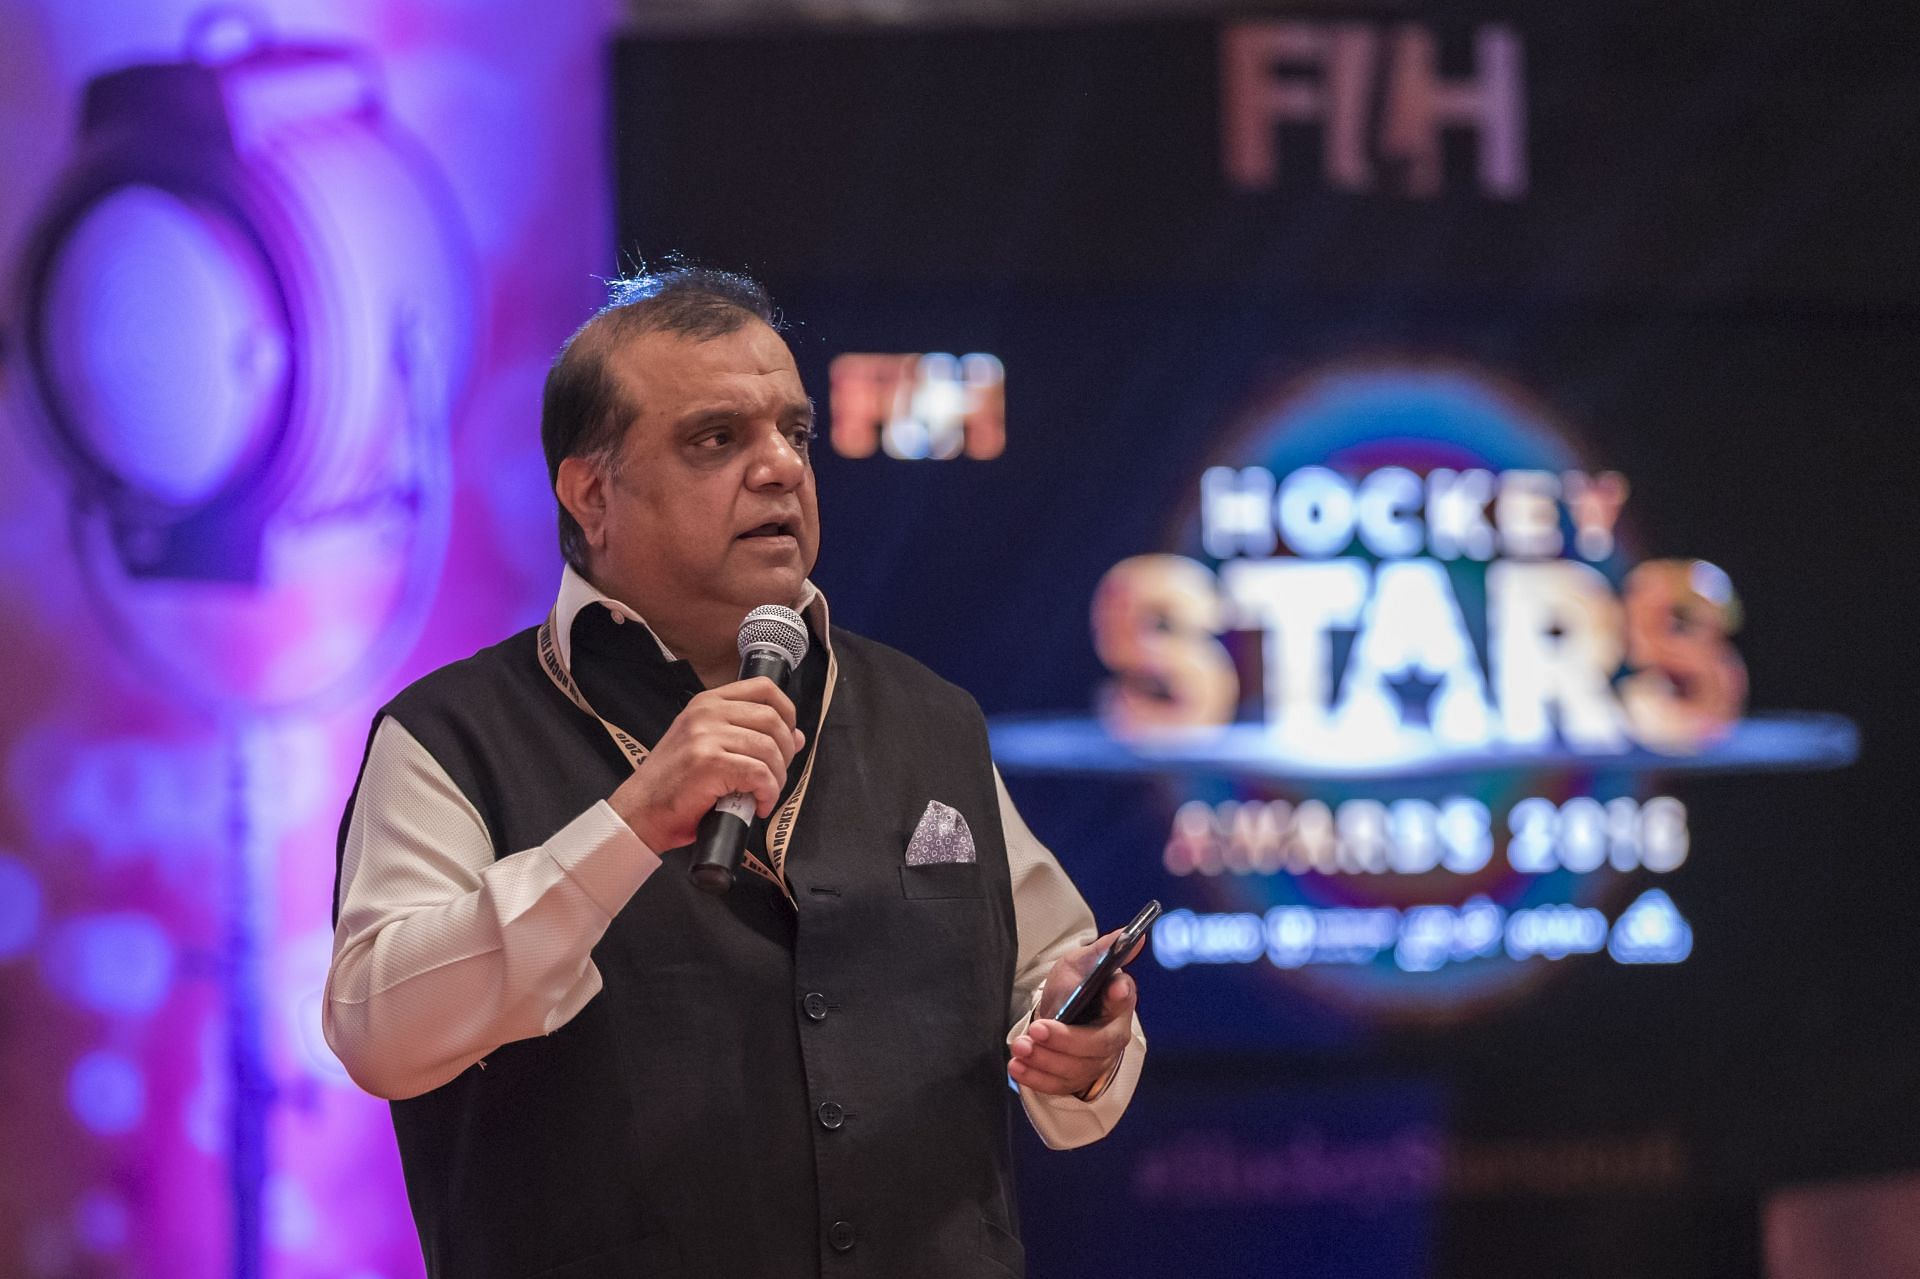 Narinder Batra at the FIH Hockey Stars Awards 2016 (Image courtesy: FIH)